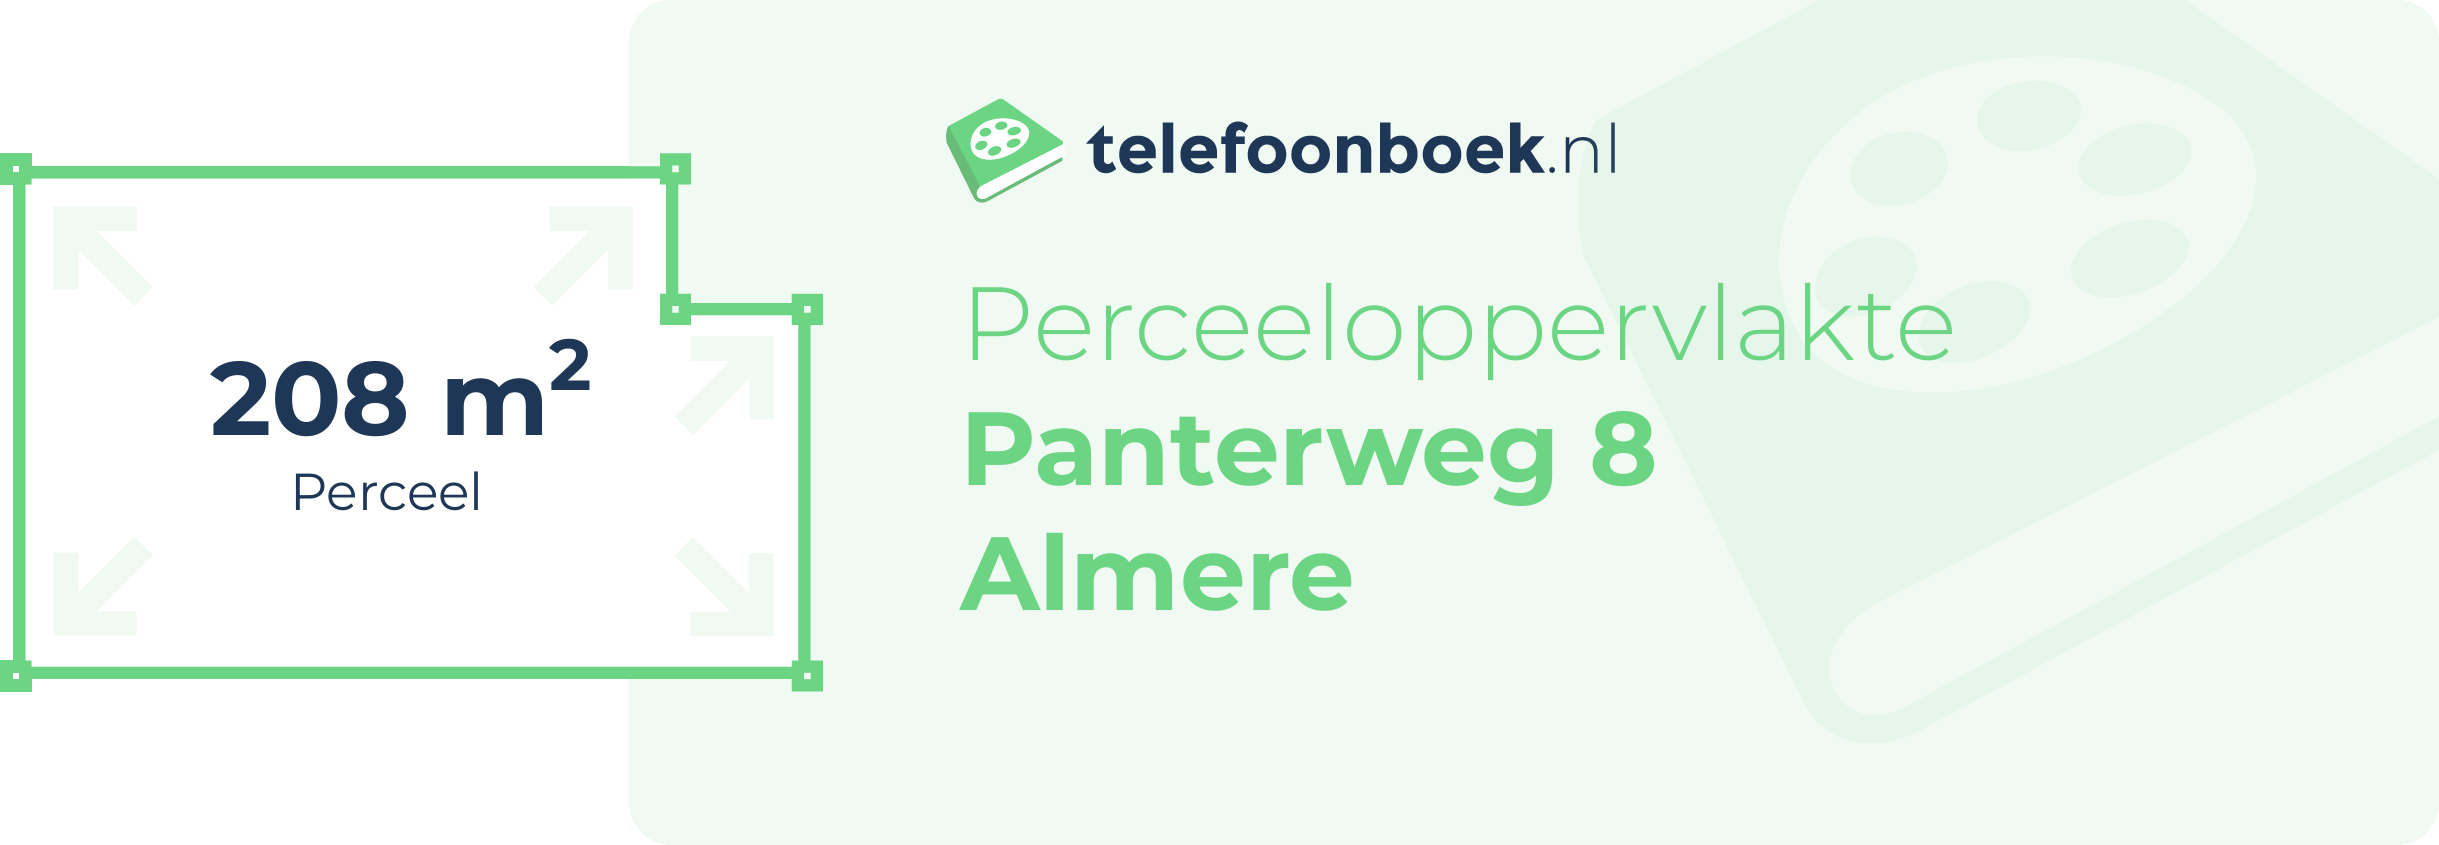 Perceeloppervlakte Panterweg 8 Almere